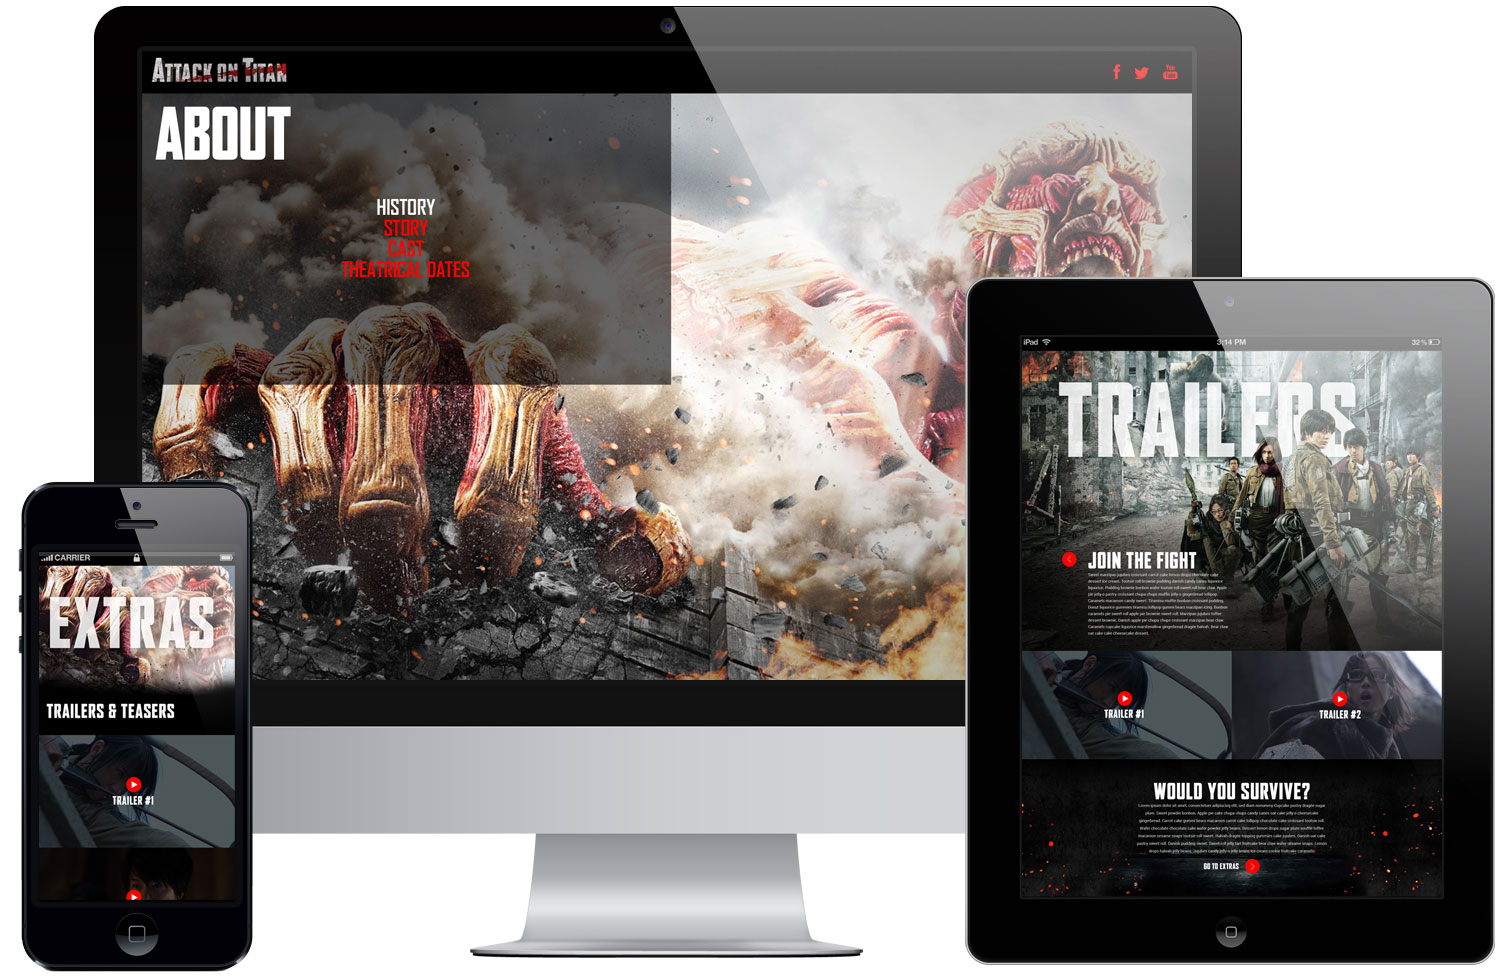 Attack on Titan's fullscreen image